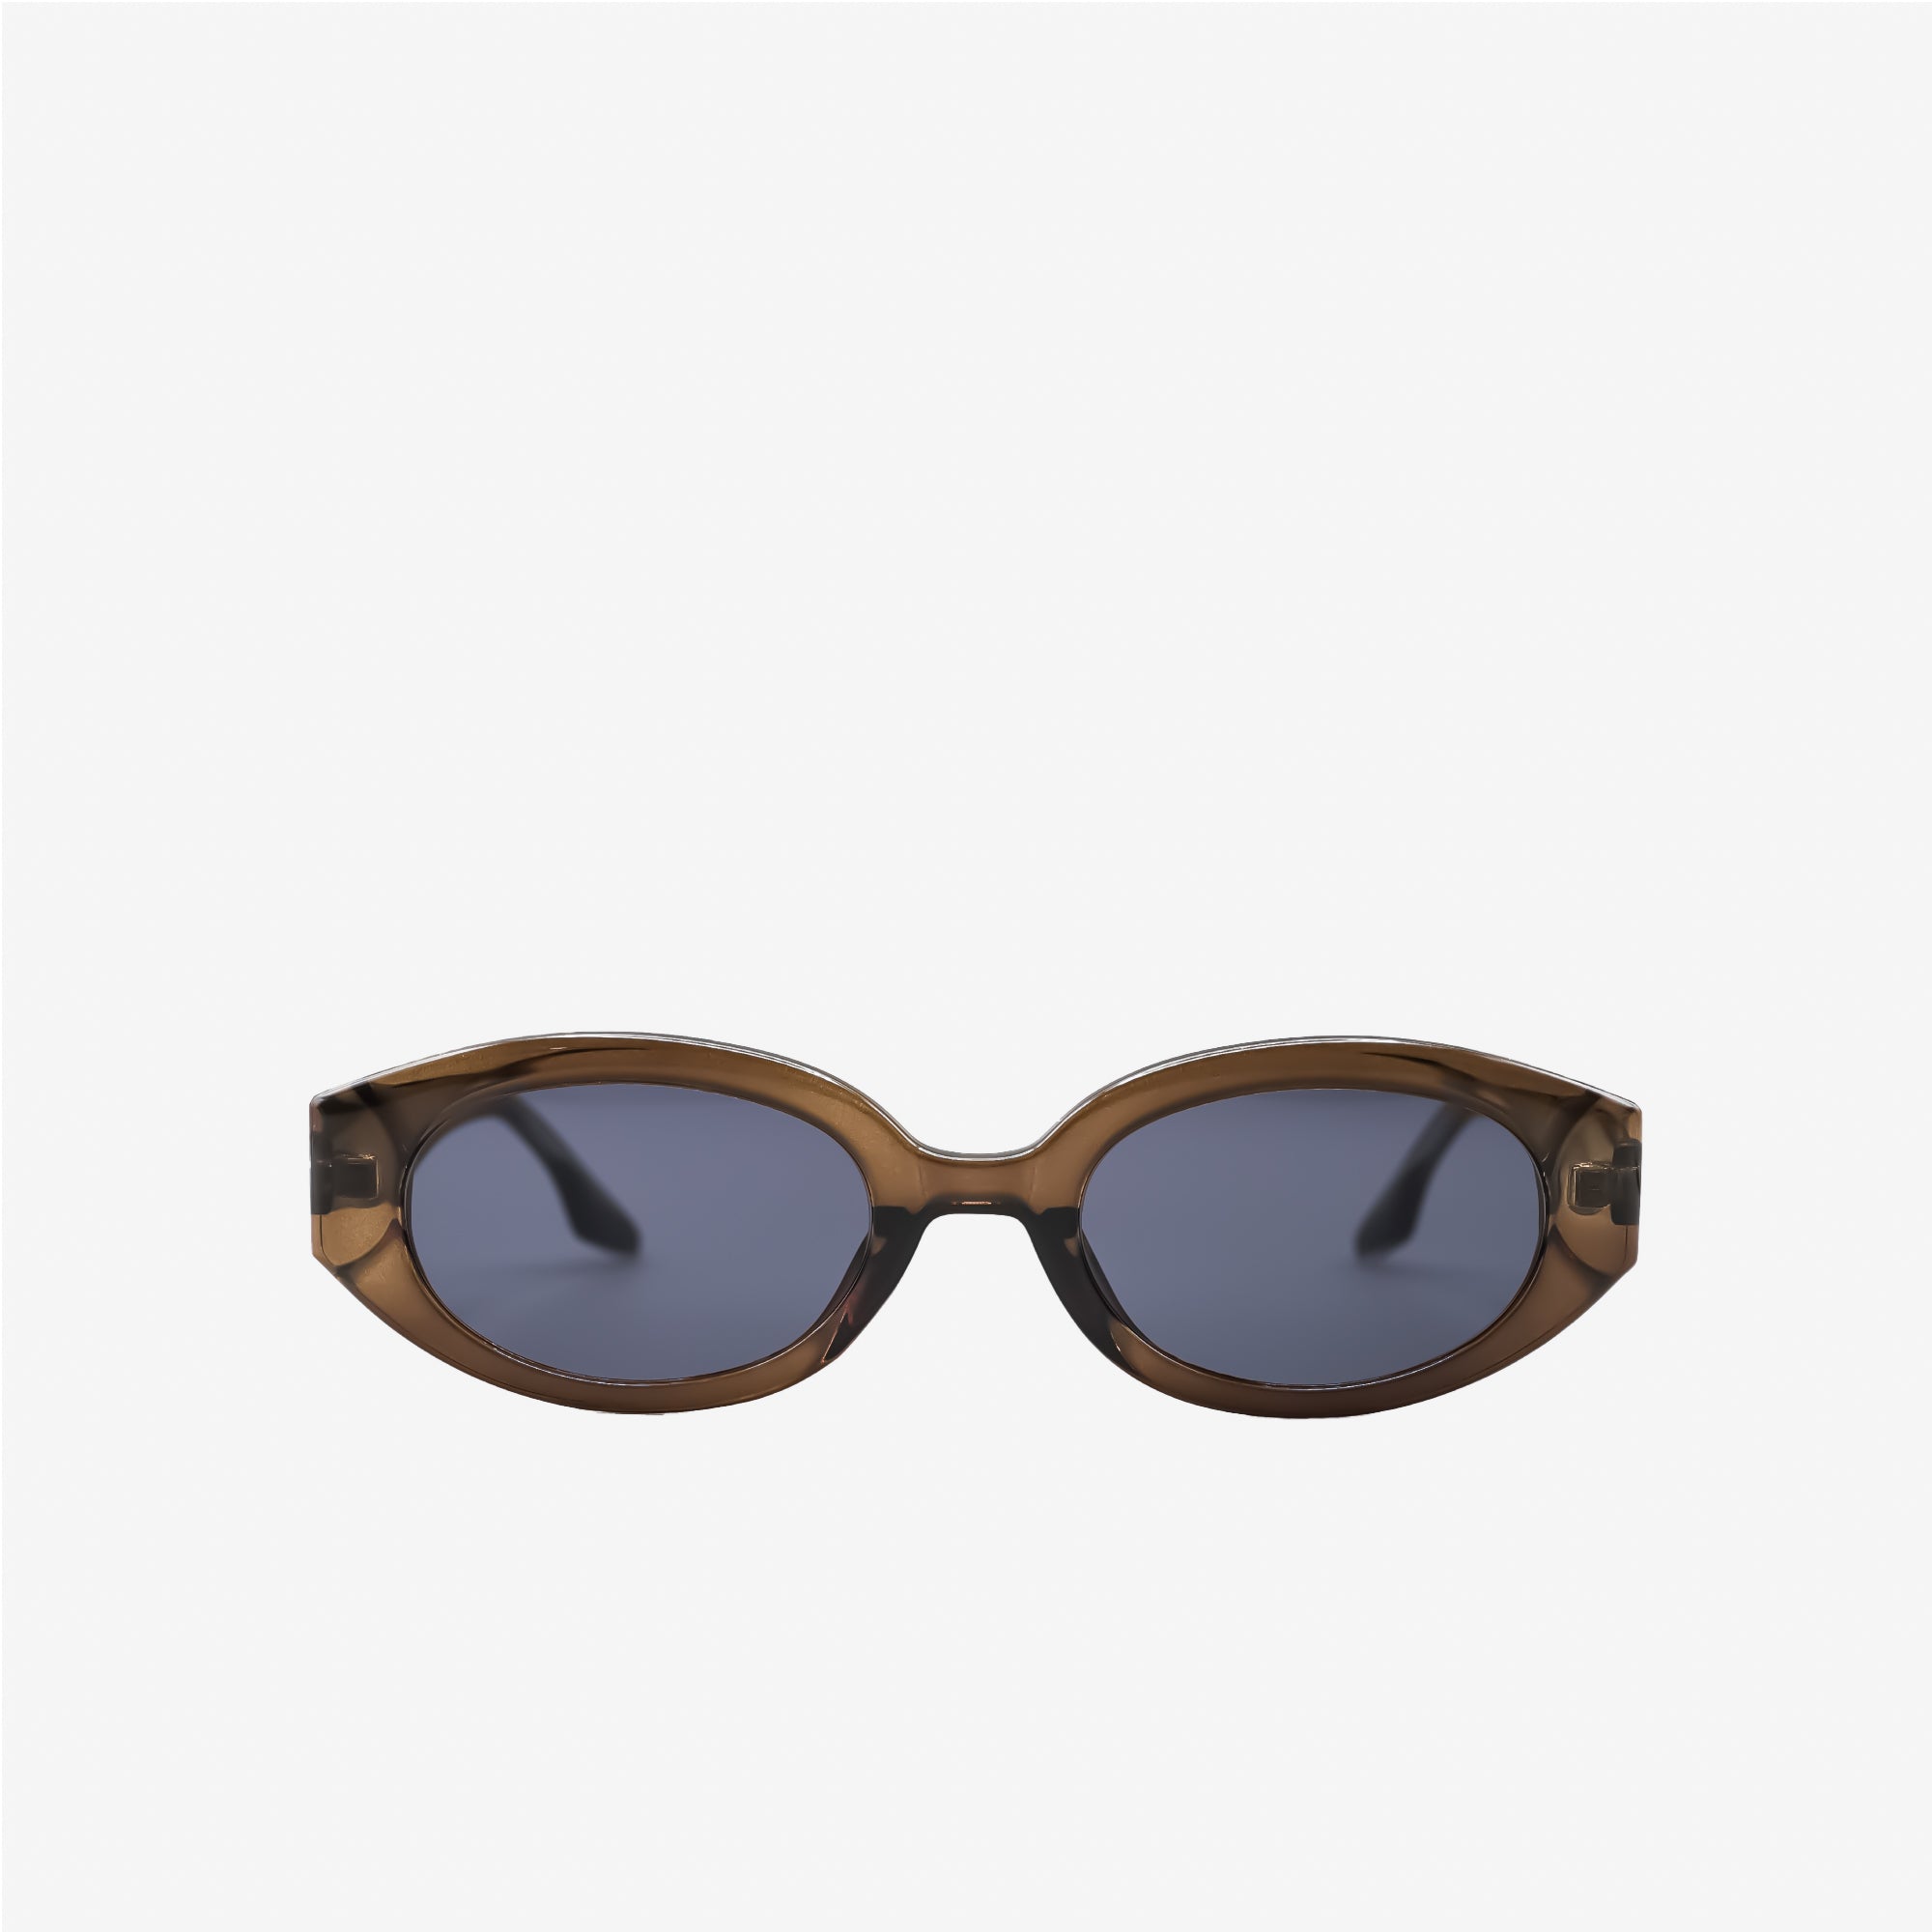 Chocolate Frame Rounded Slim Sunglasses